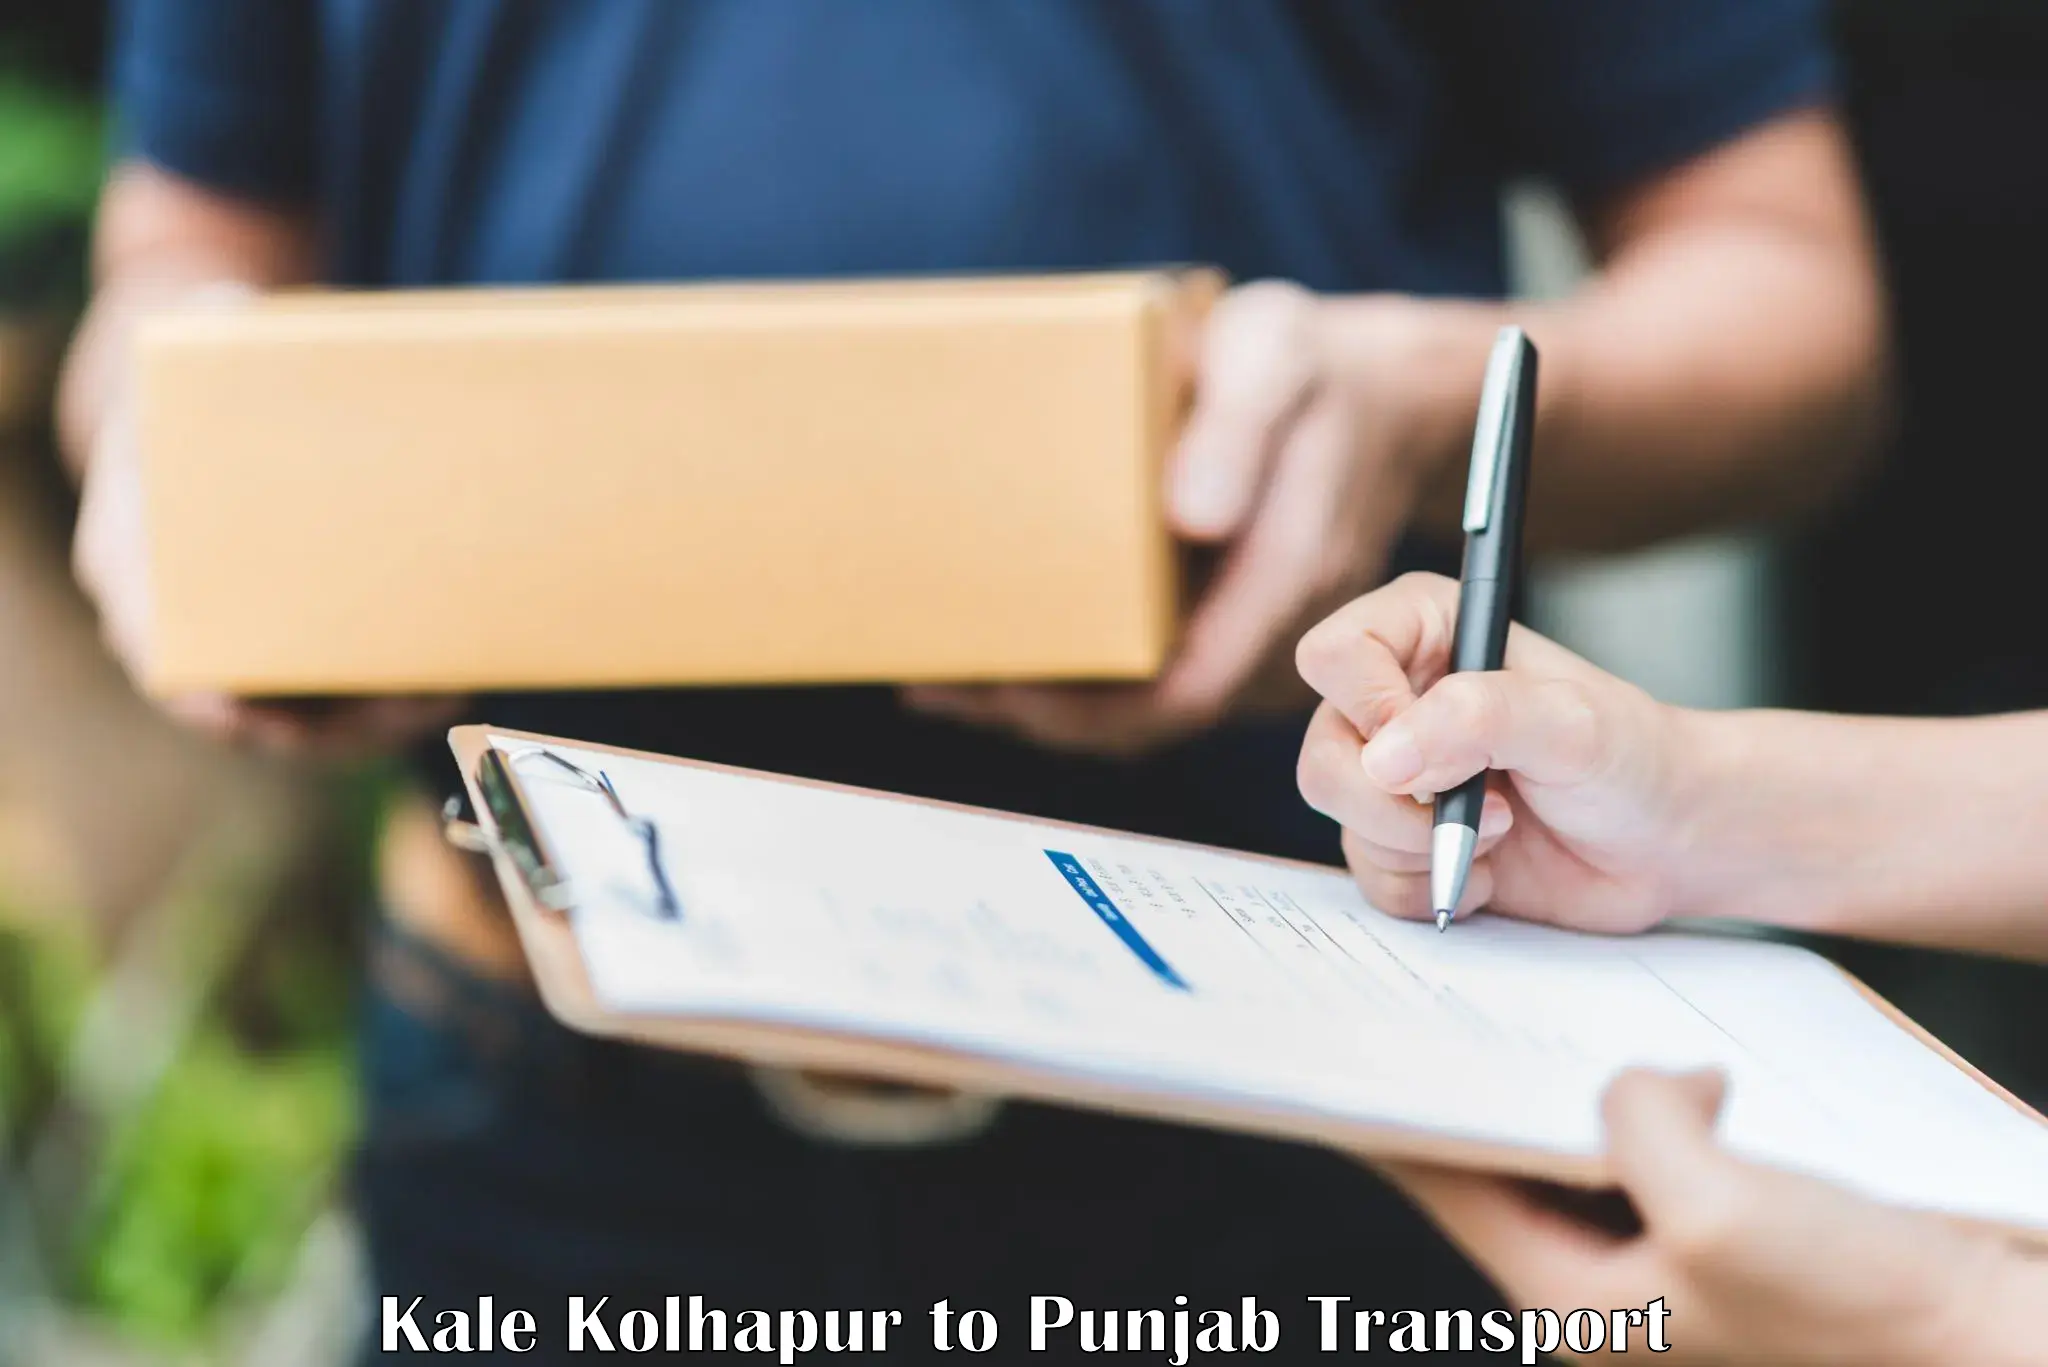 Online transport service Kale Kolhapur to Rajpura